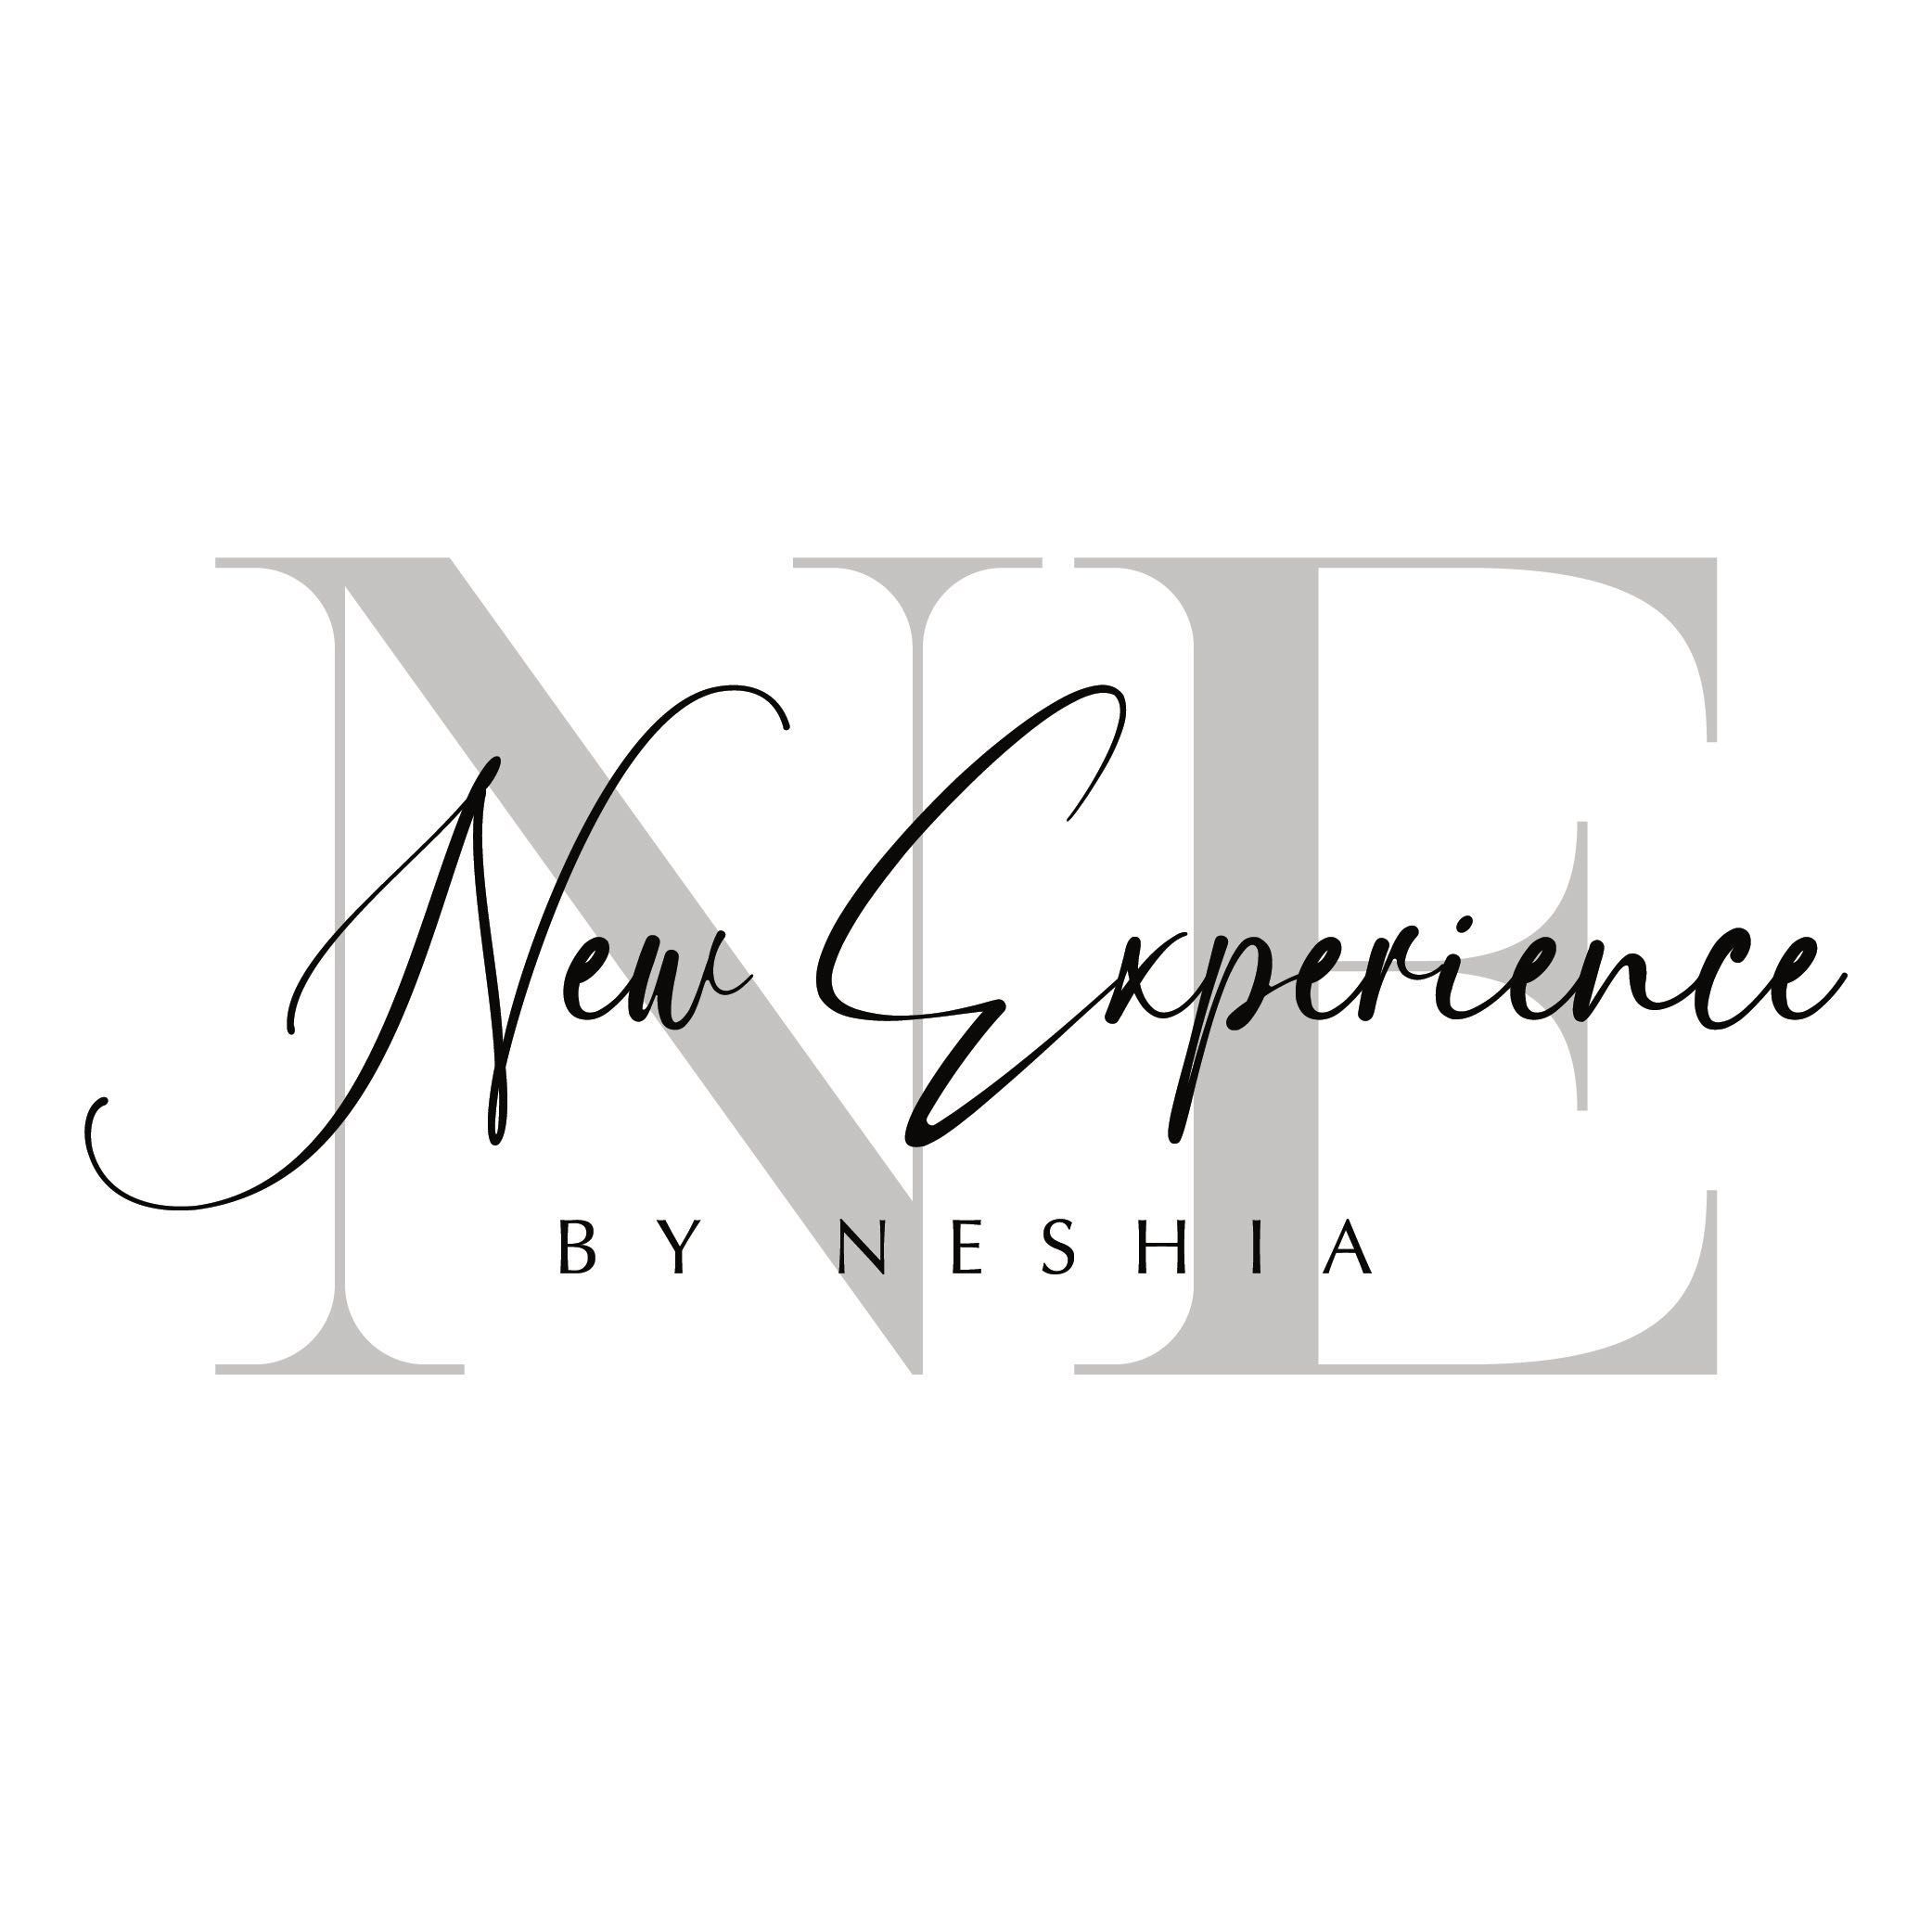 New Experience By Neshia, 6420 Richmond ave Houston tx 77057, Suite 559, Houston, 77057